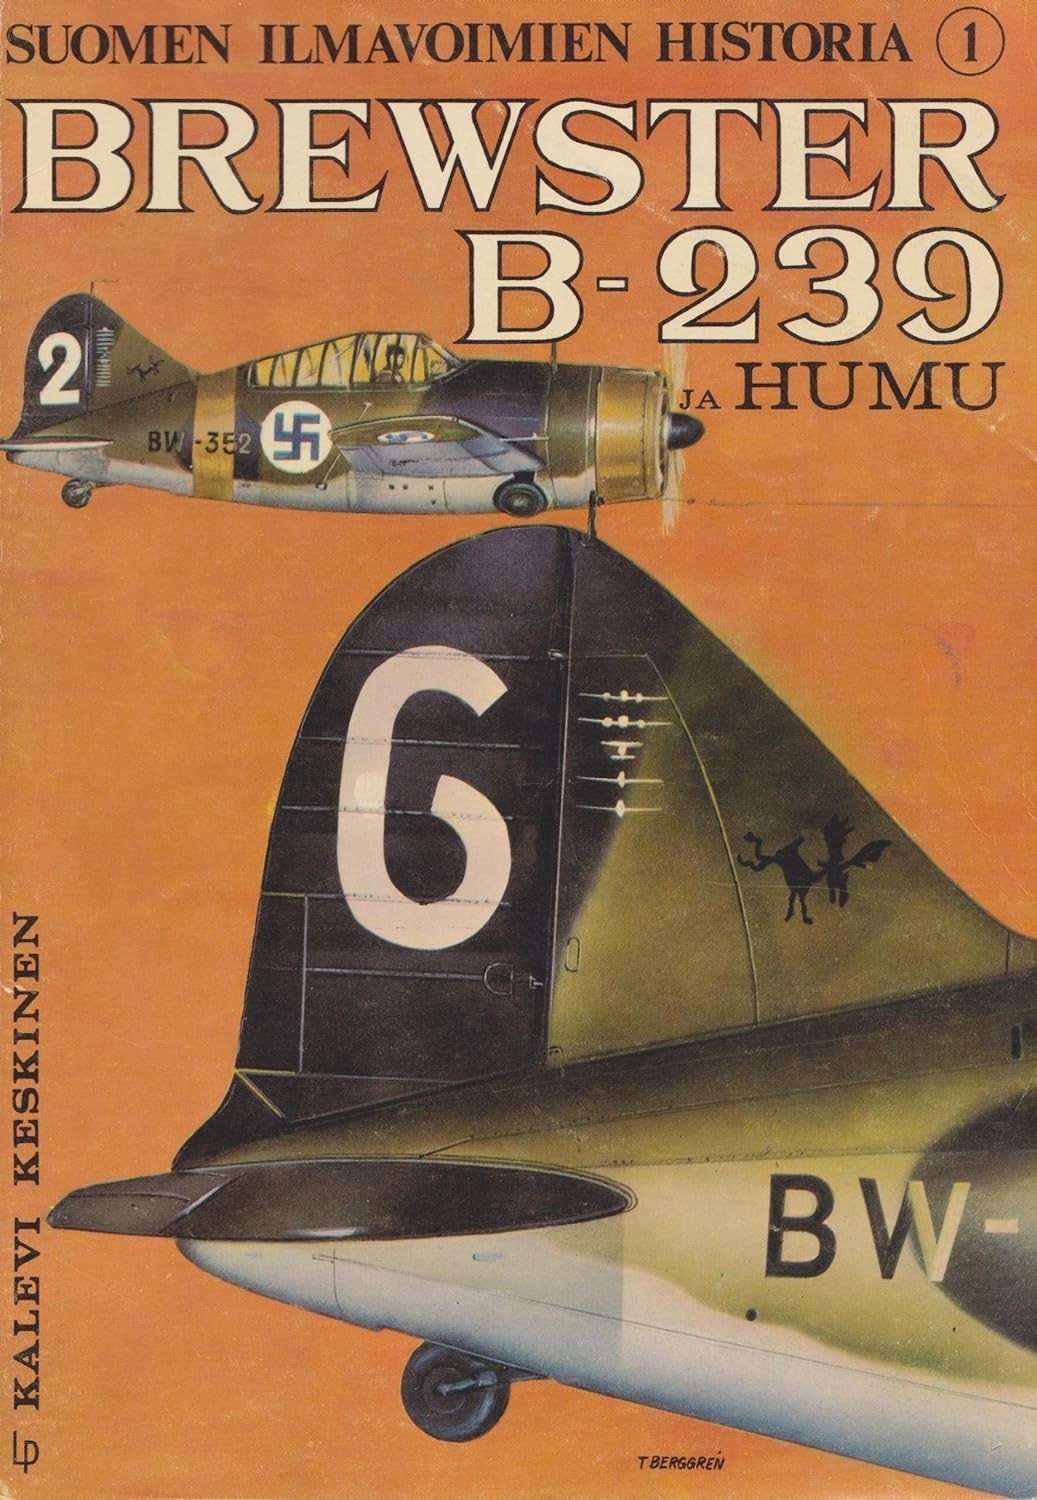 Brewster Buffalo B-239 ja Humu